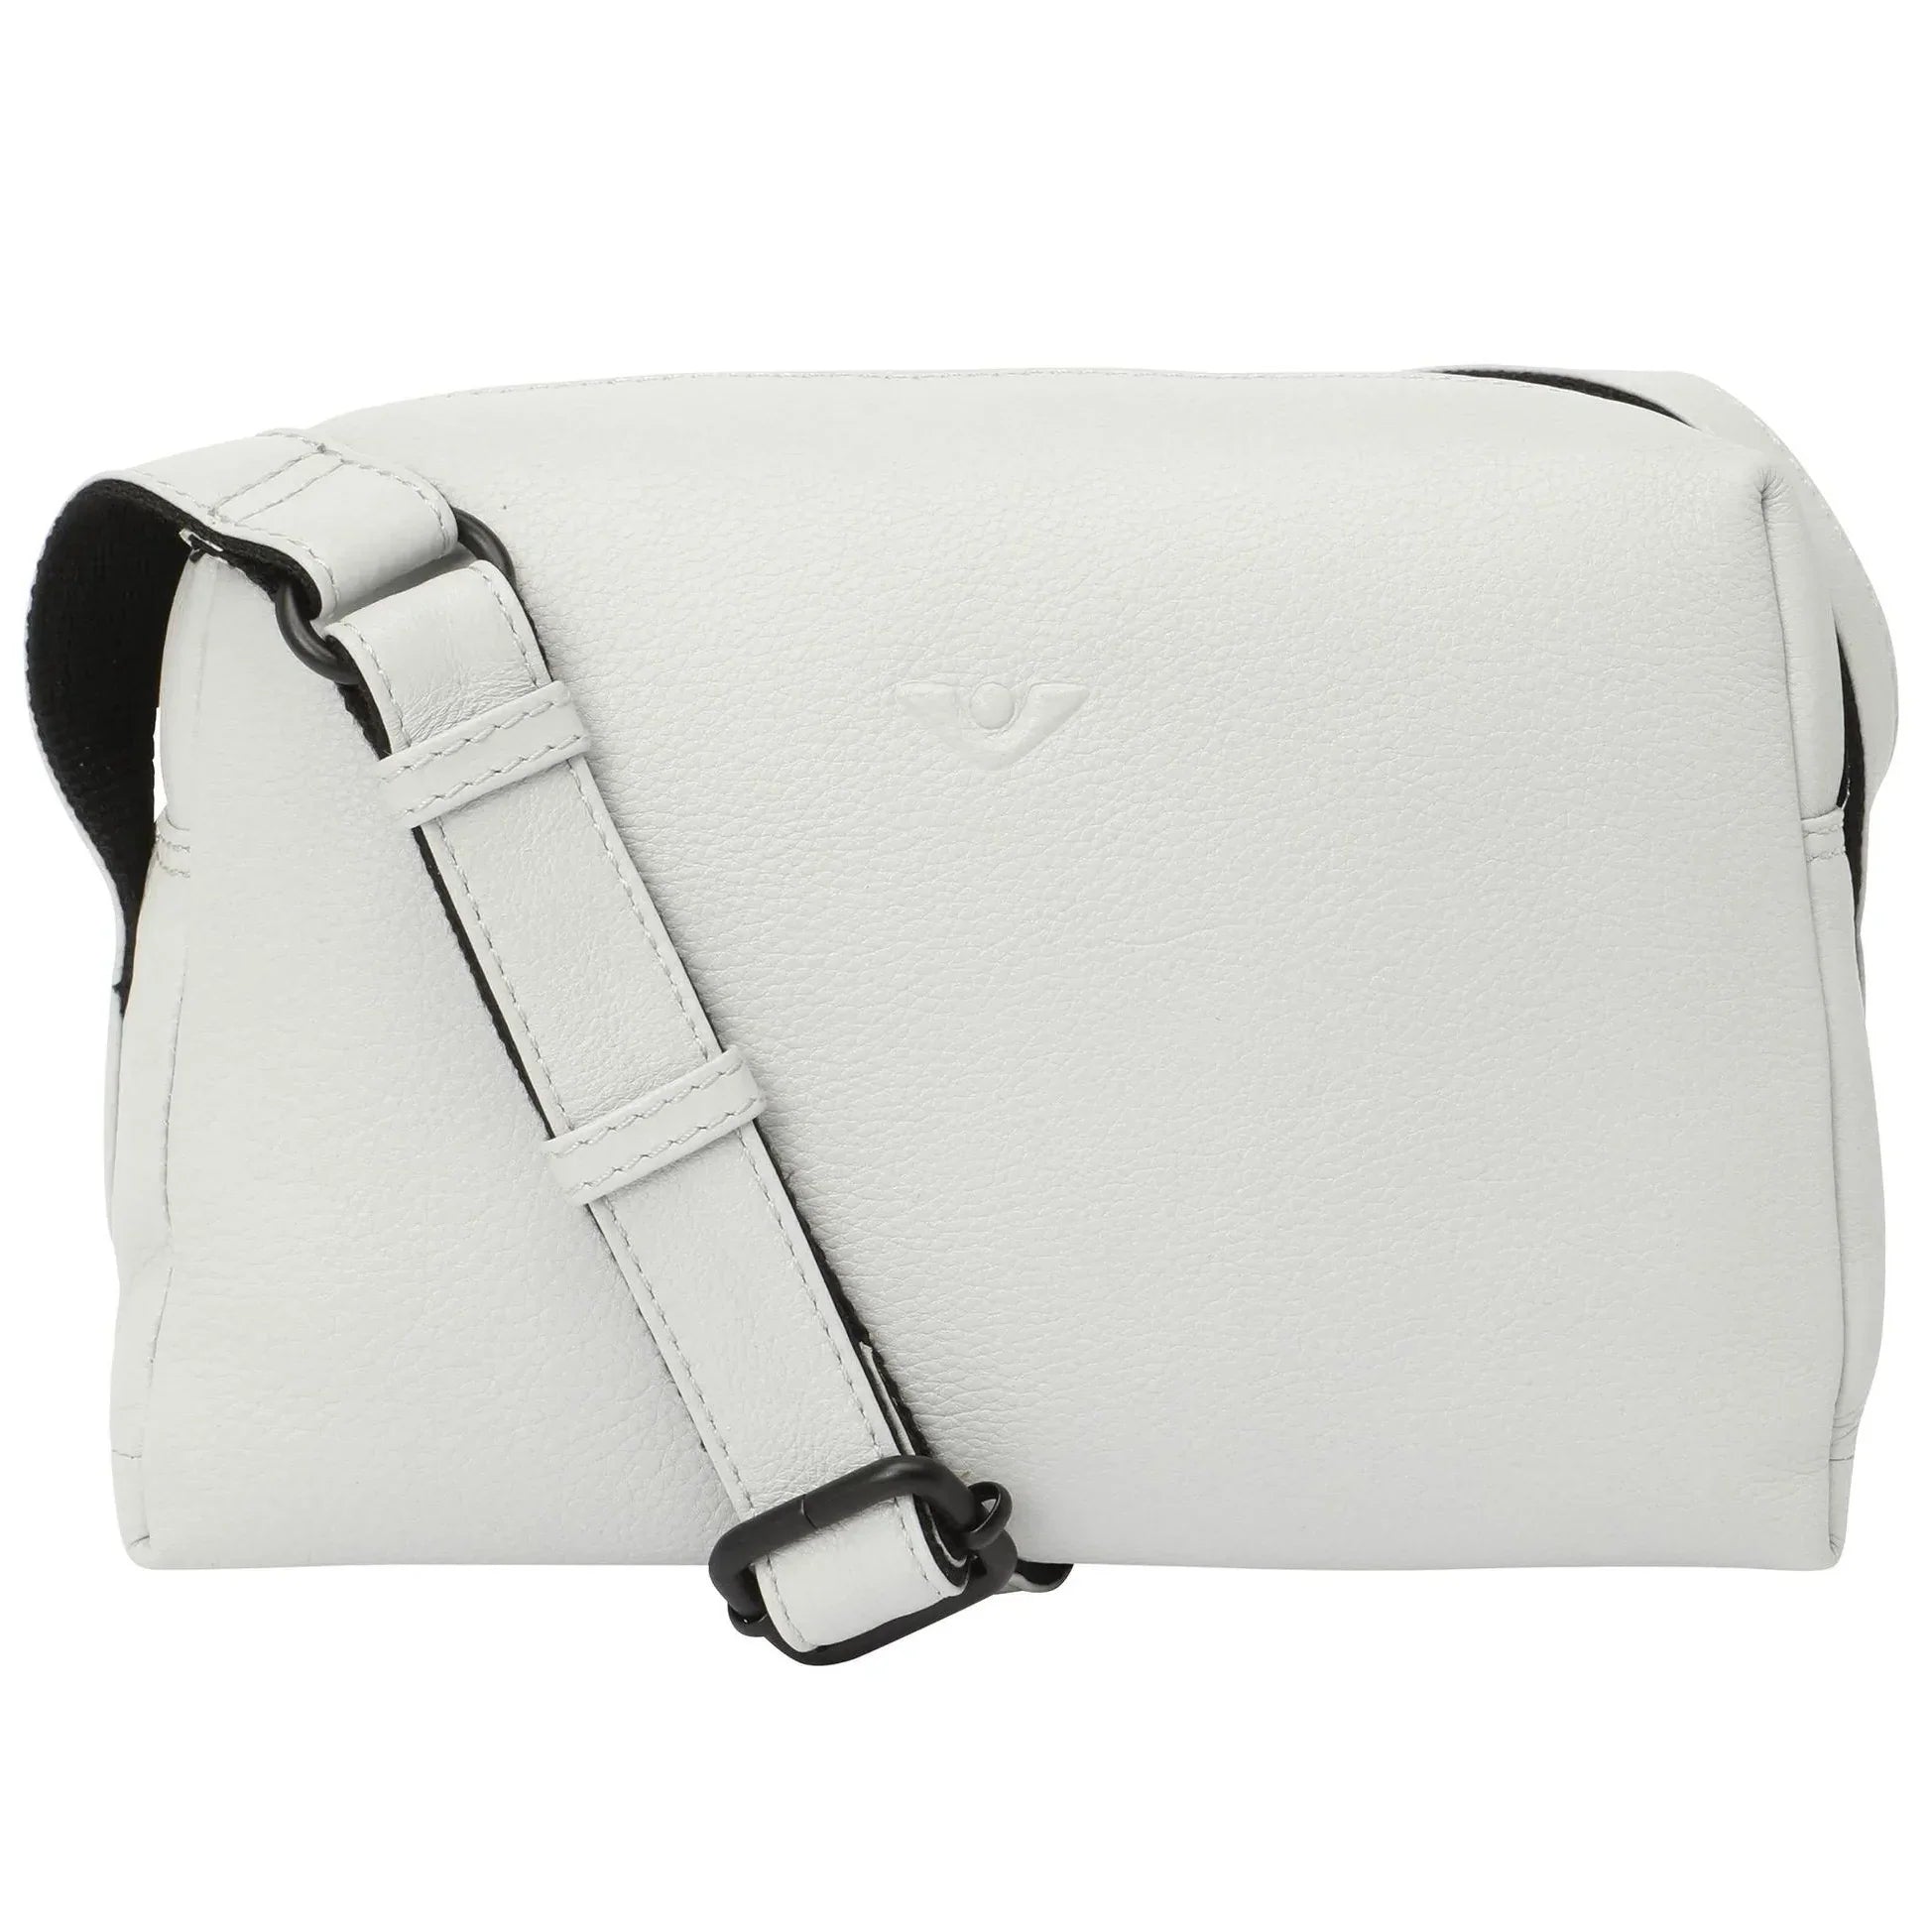 VOi-Design 4 Seasons Birte shoulder bag 23 cm - Platinum